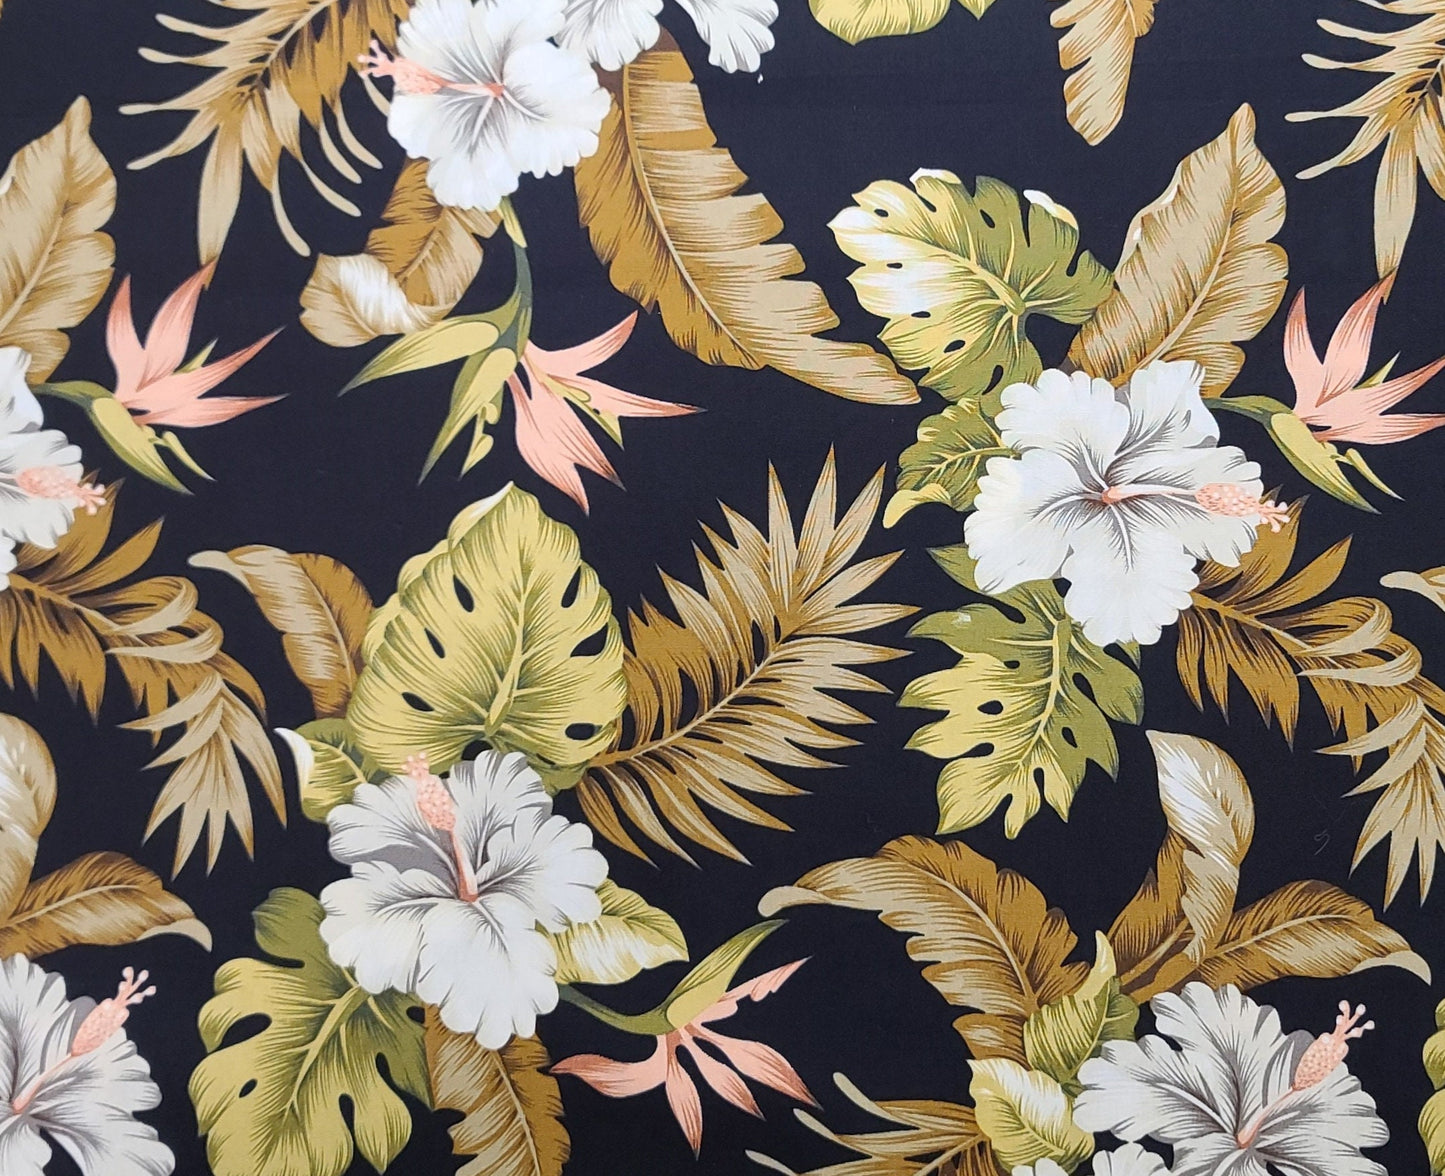 Printed by David Textiles Printex Fabrics Inc- Black Fabric / Gold, Green, White and Light Coral Tropical Flower Print